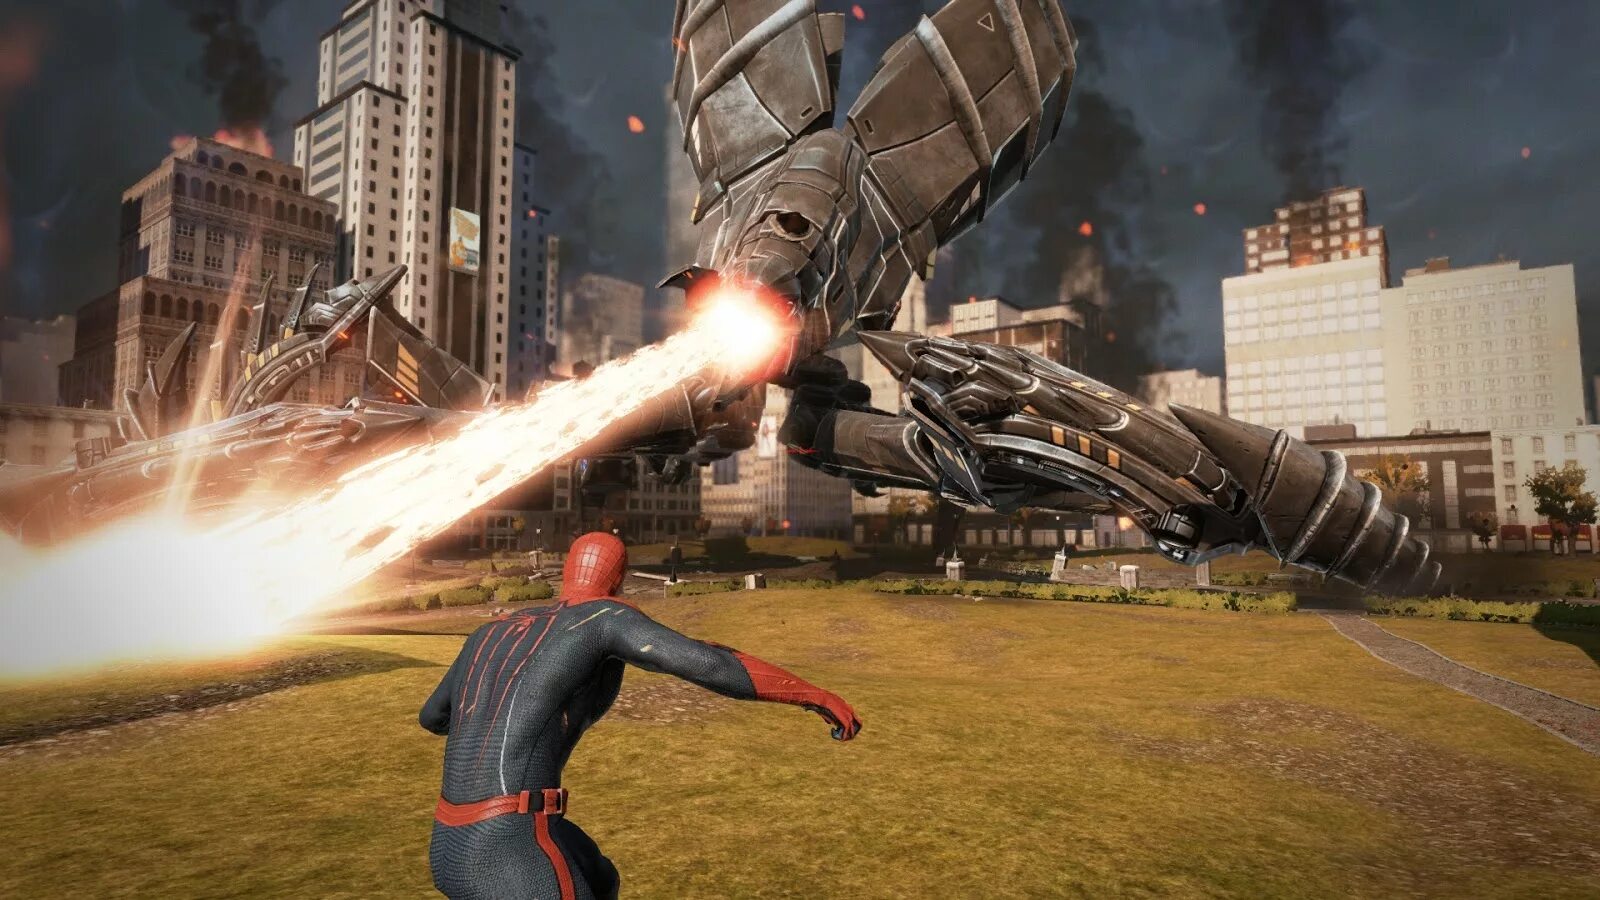 Игры game game 2012. The amazing Spider-man игра. The amazing Spider-man 2 игра. Человек паук игра 2012. The amazing Spider-man 1 игра.